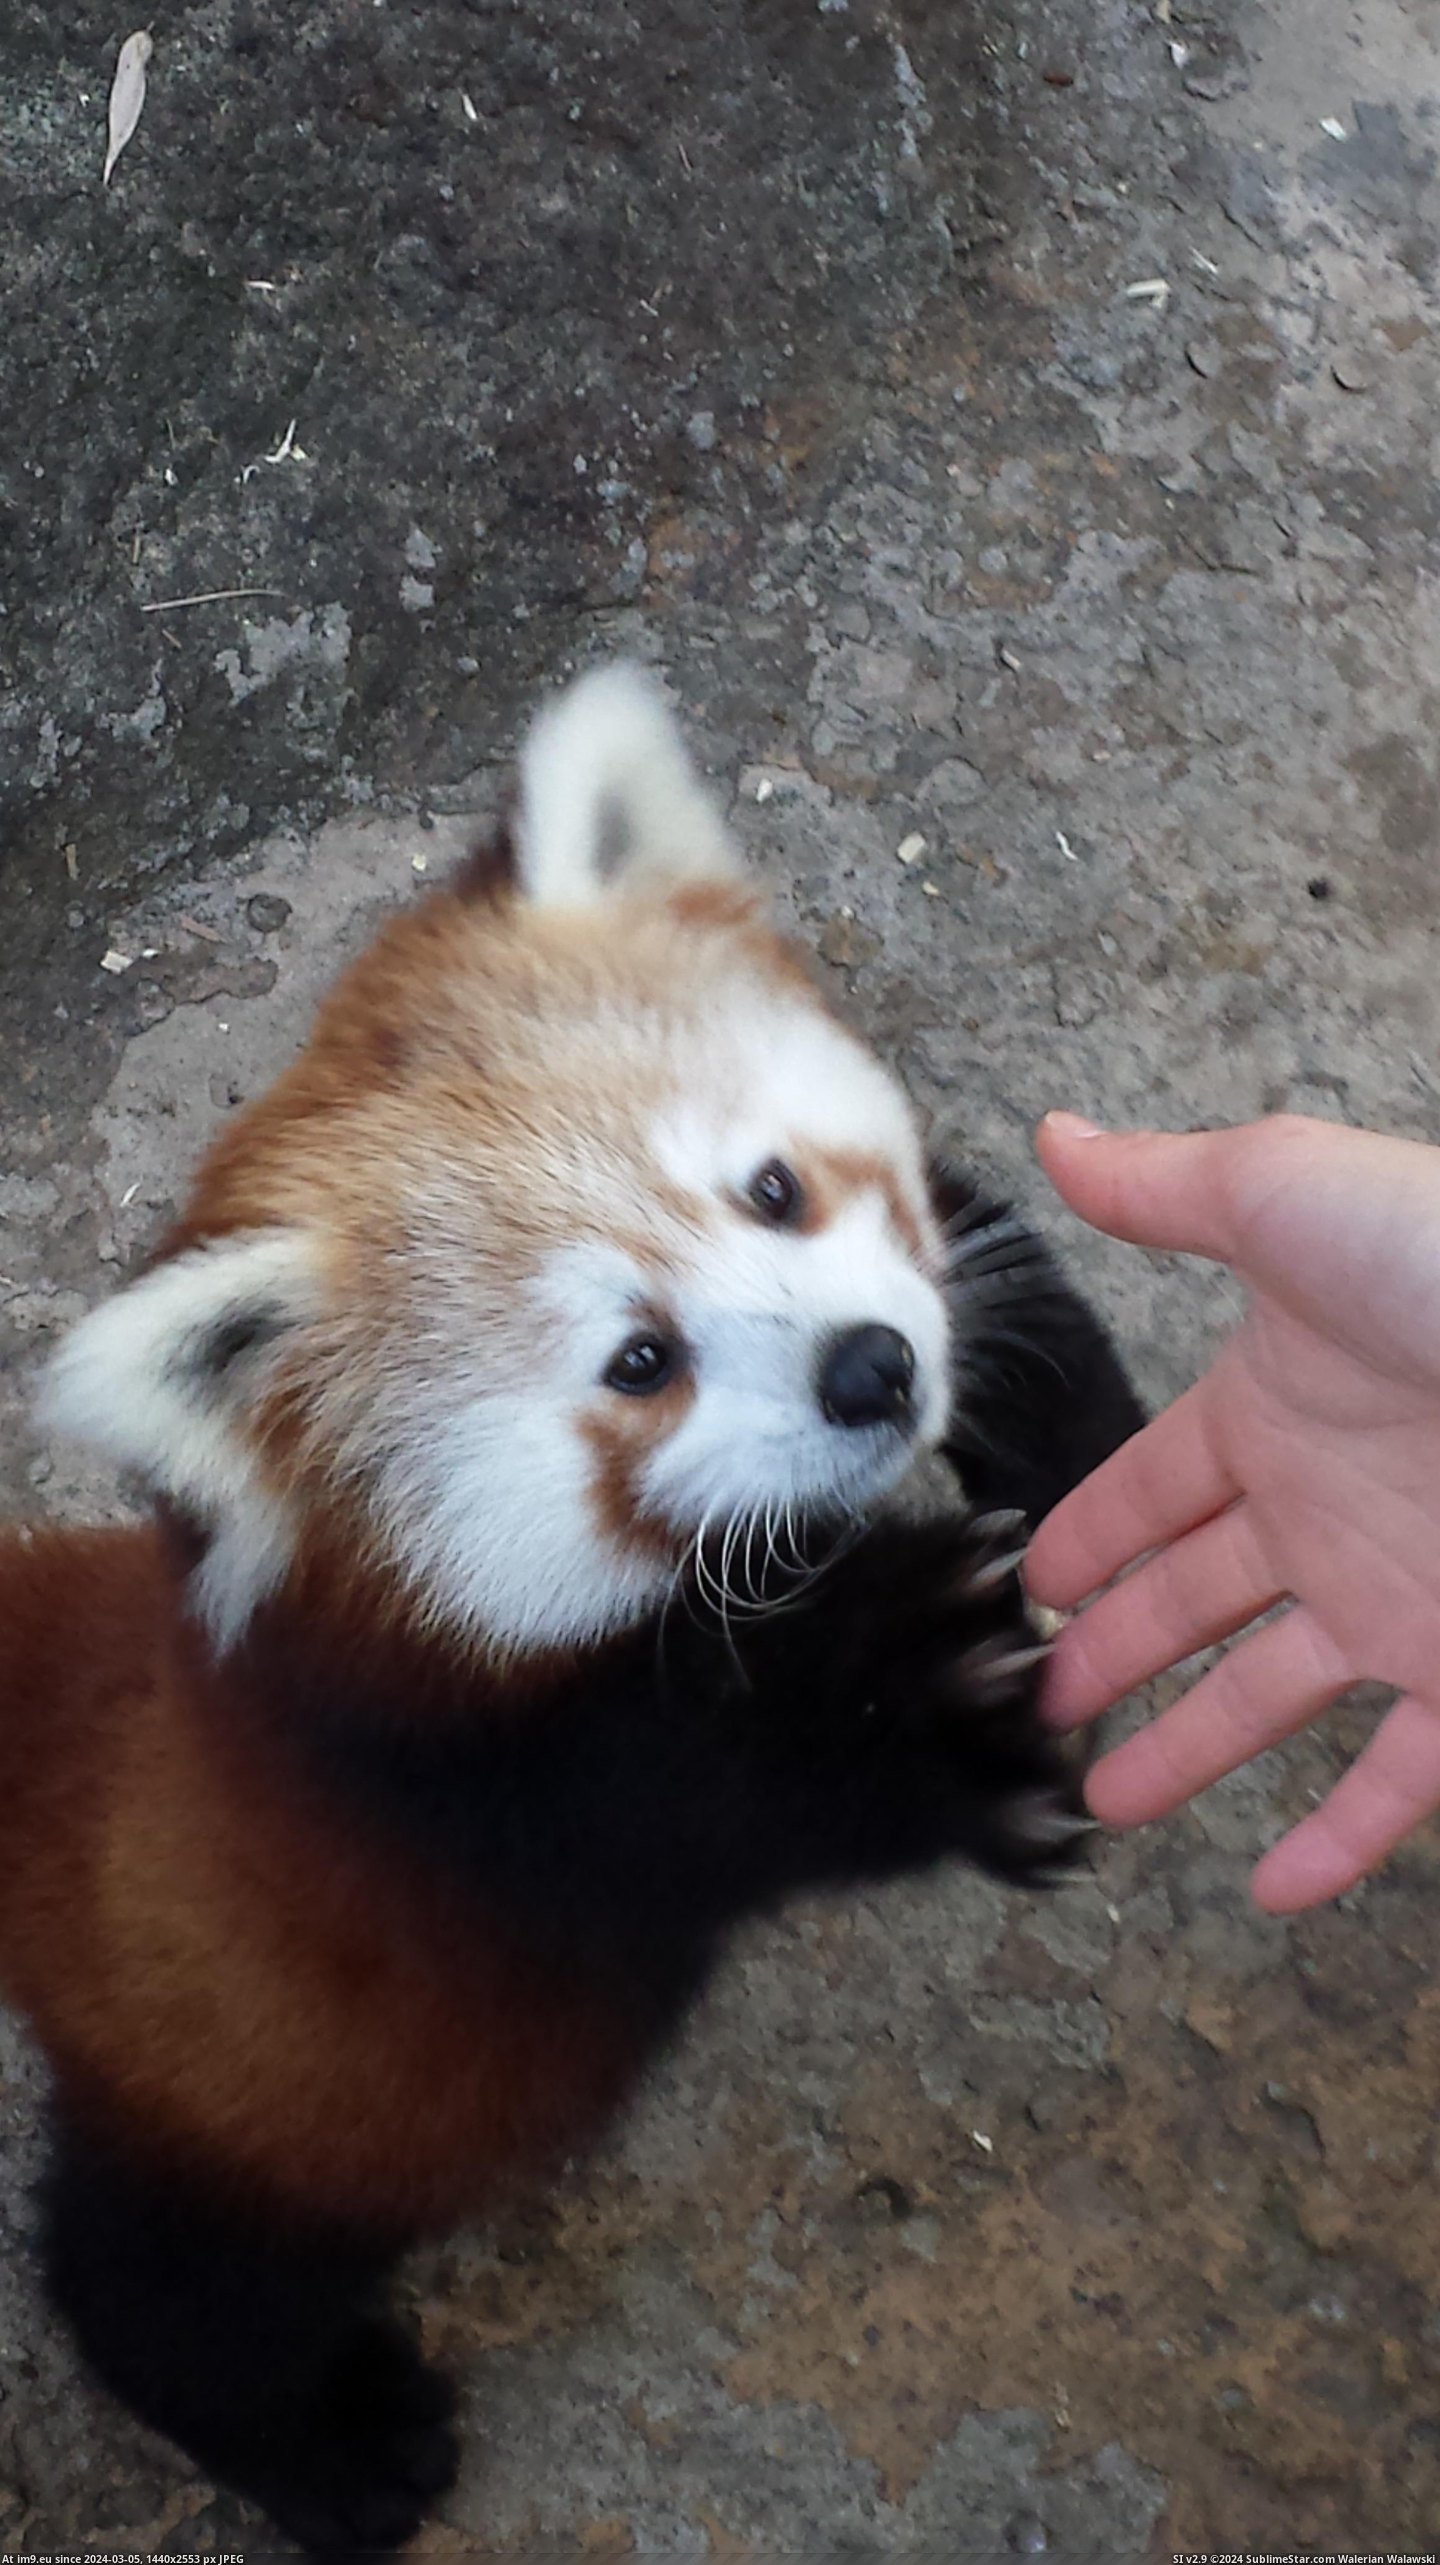 #Red #Girlfriend #Zoo #Shake #Panda #Got #Hands [Aww] My girlfriend got to shake hands with a red panda at the zoo! Pic. (Obraz z album My r/AWW favs))